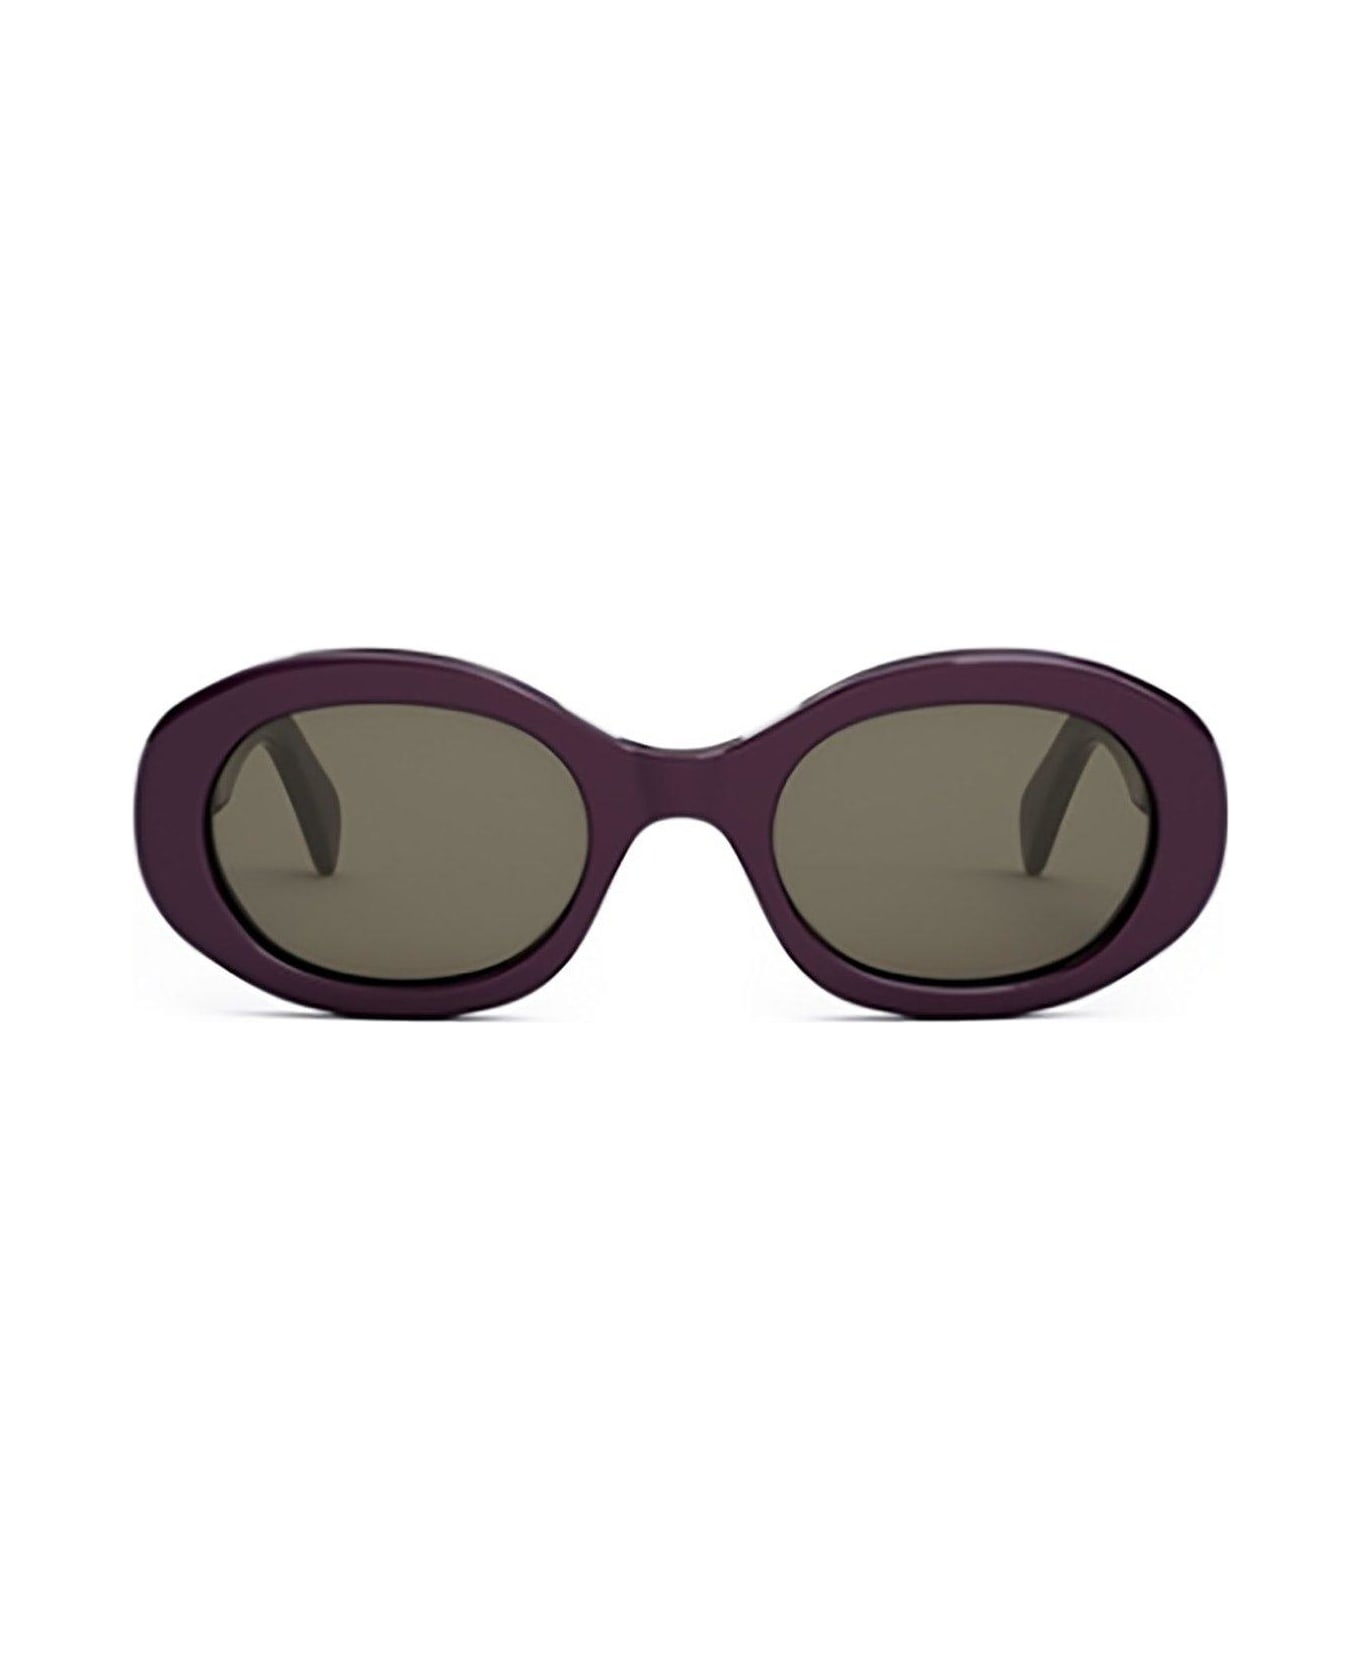 Celine Oval Frame Sunglasses - 81e